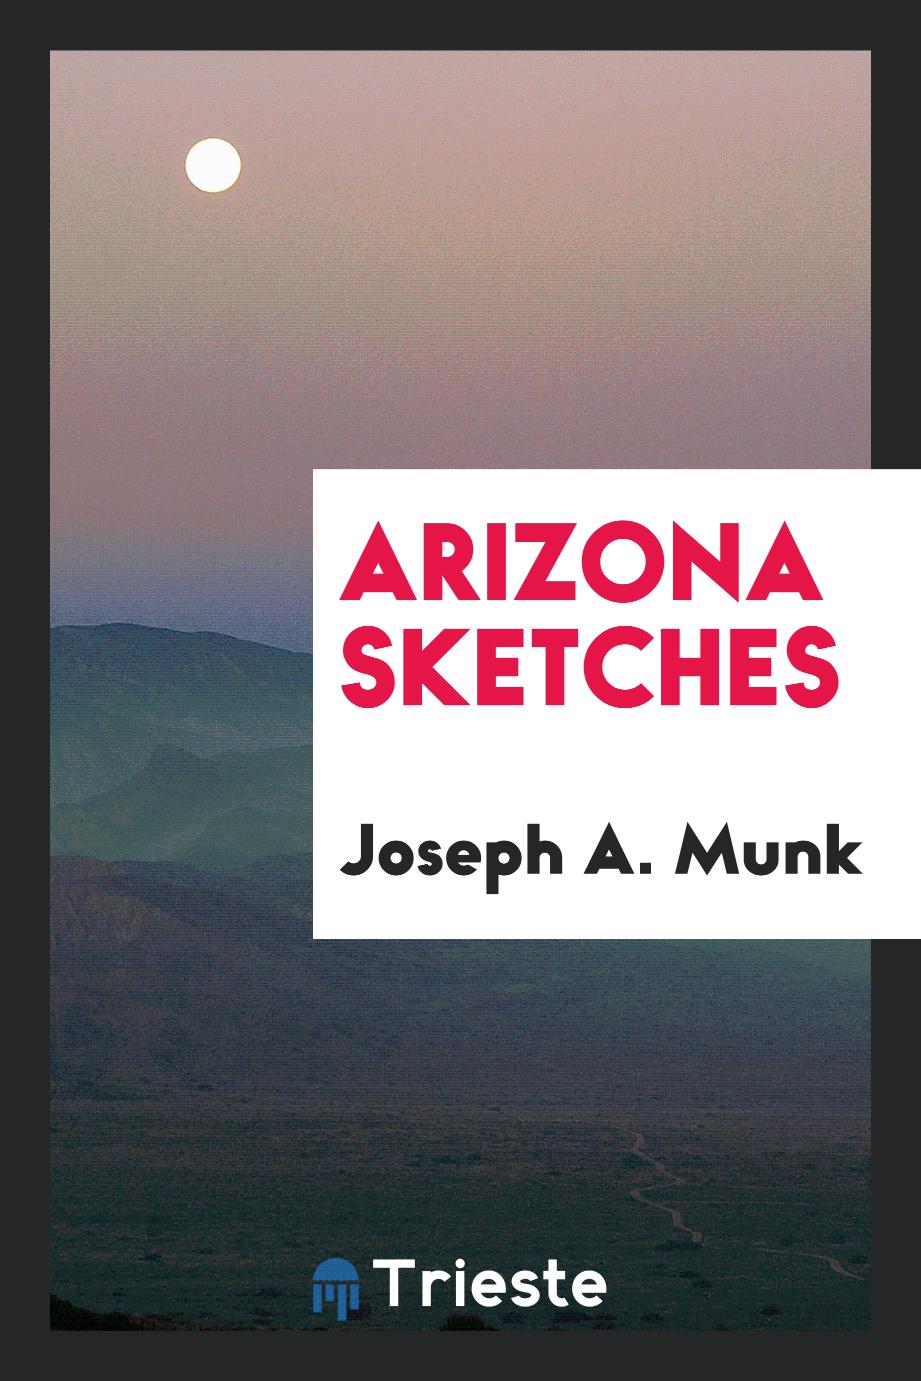 Arizona sketches